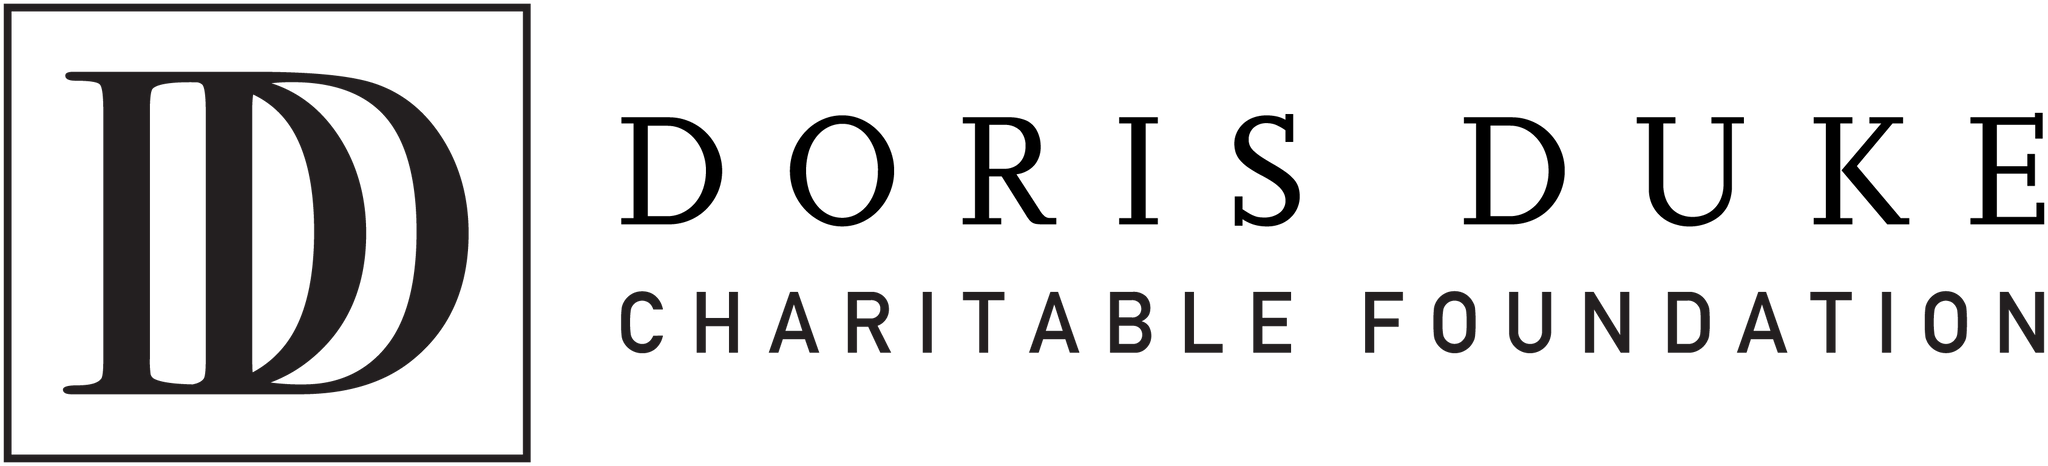 Doris Duke Charitable Foundation logo, including the organization's name and interlocked D initials.